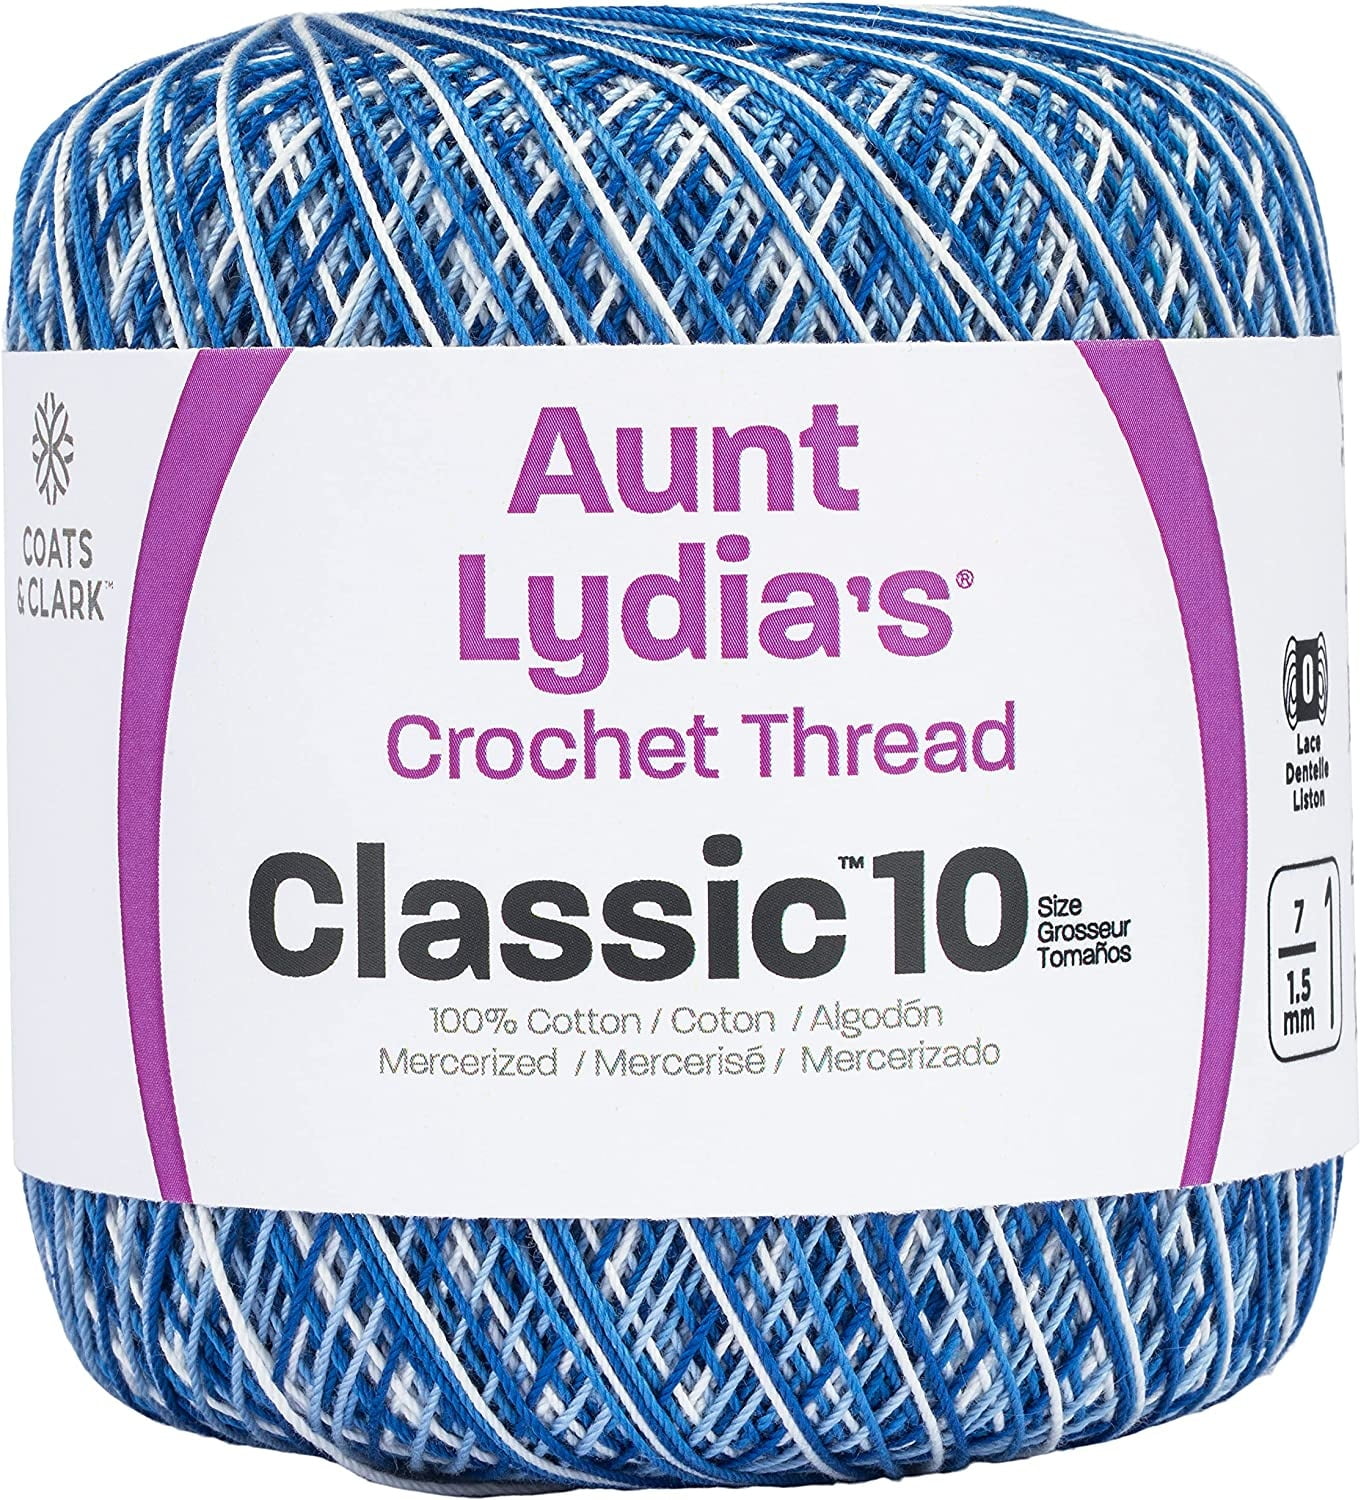 PASTELS VARIEGATED - Aunt Lydia's Classic 10 Crochet Thread. 300yds. Item  #154-0465